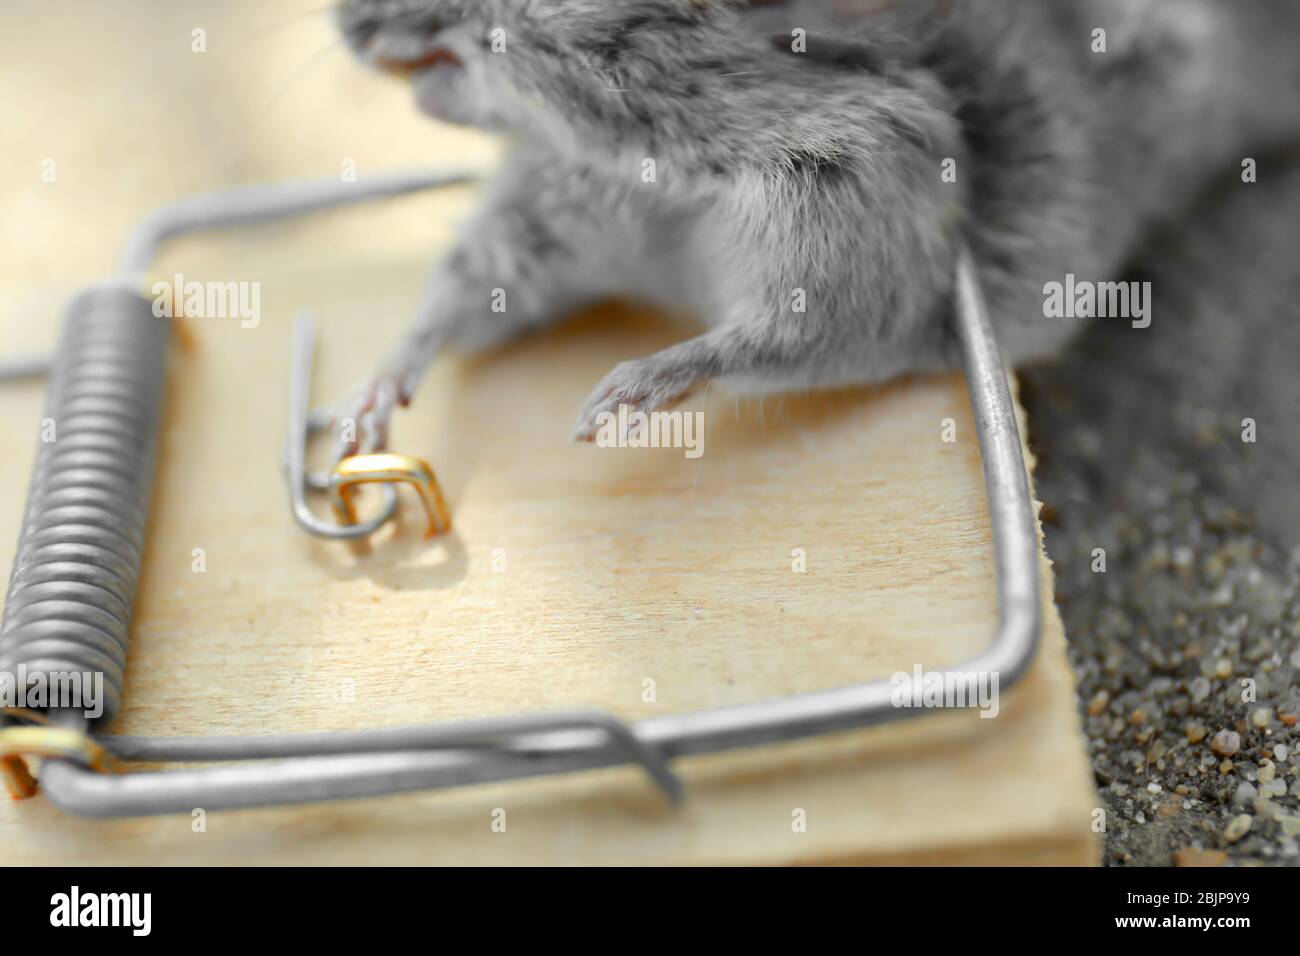 https://c8.alamy.com/comp/2BJP9Y9/dead-mouse-caught-in-snap-trap-outdoors-closeup-2BJP9Y9.jpg